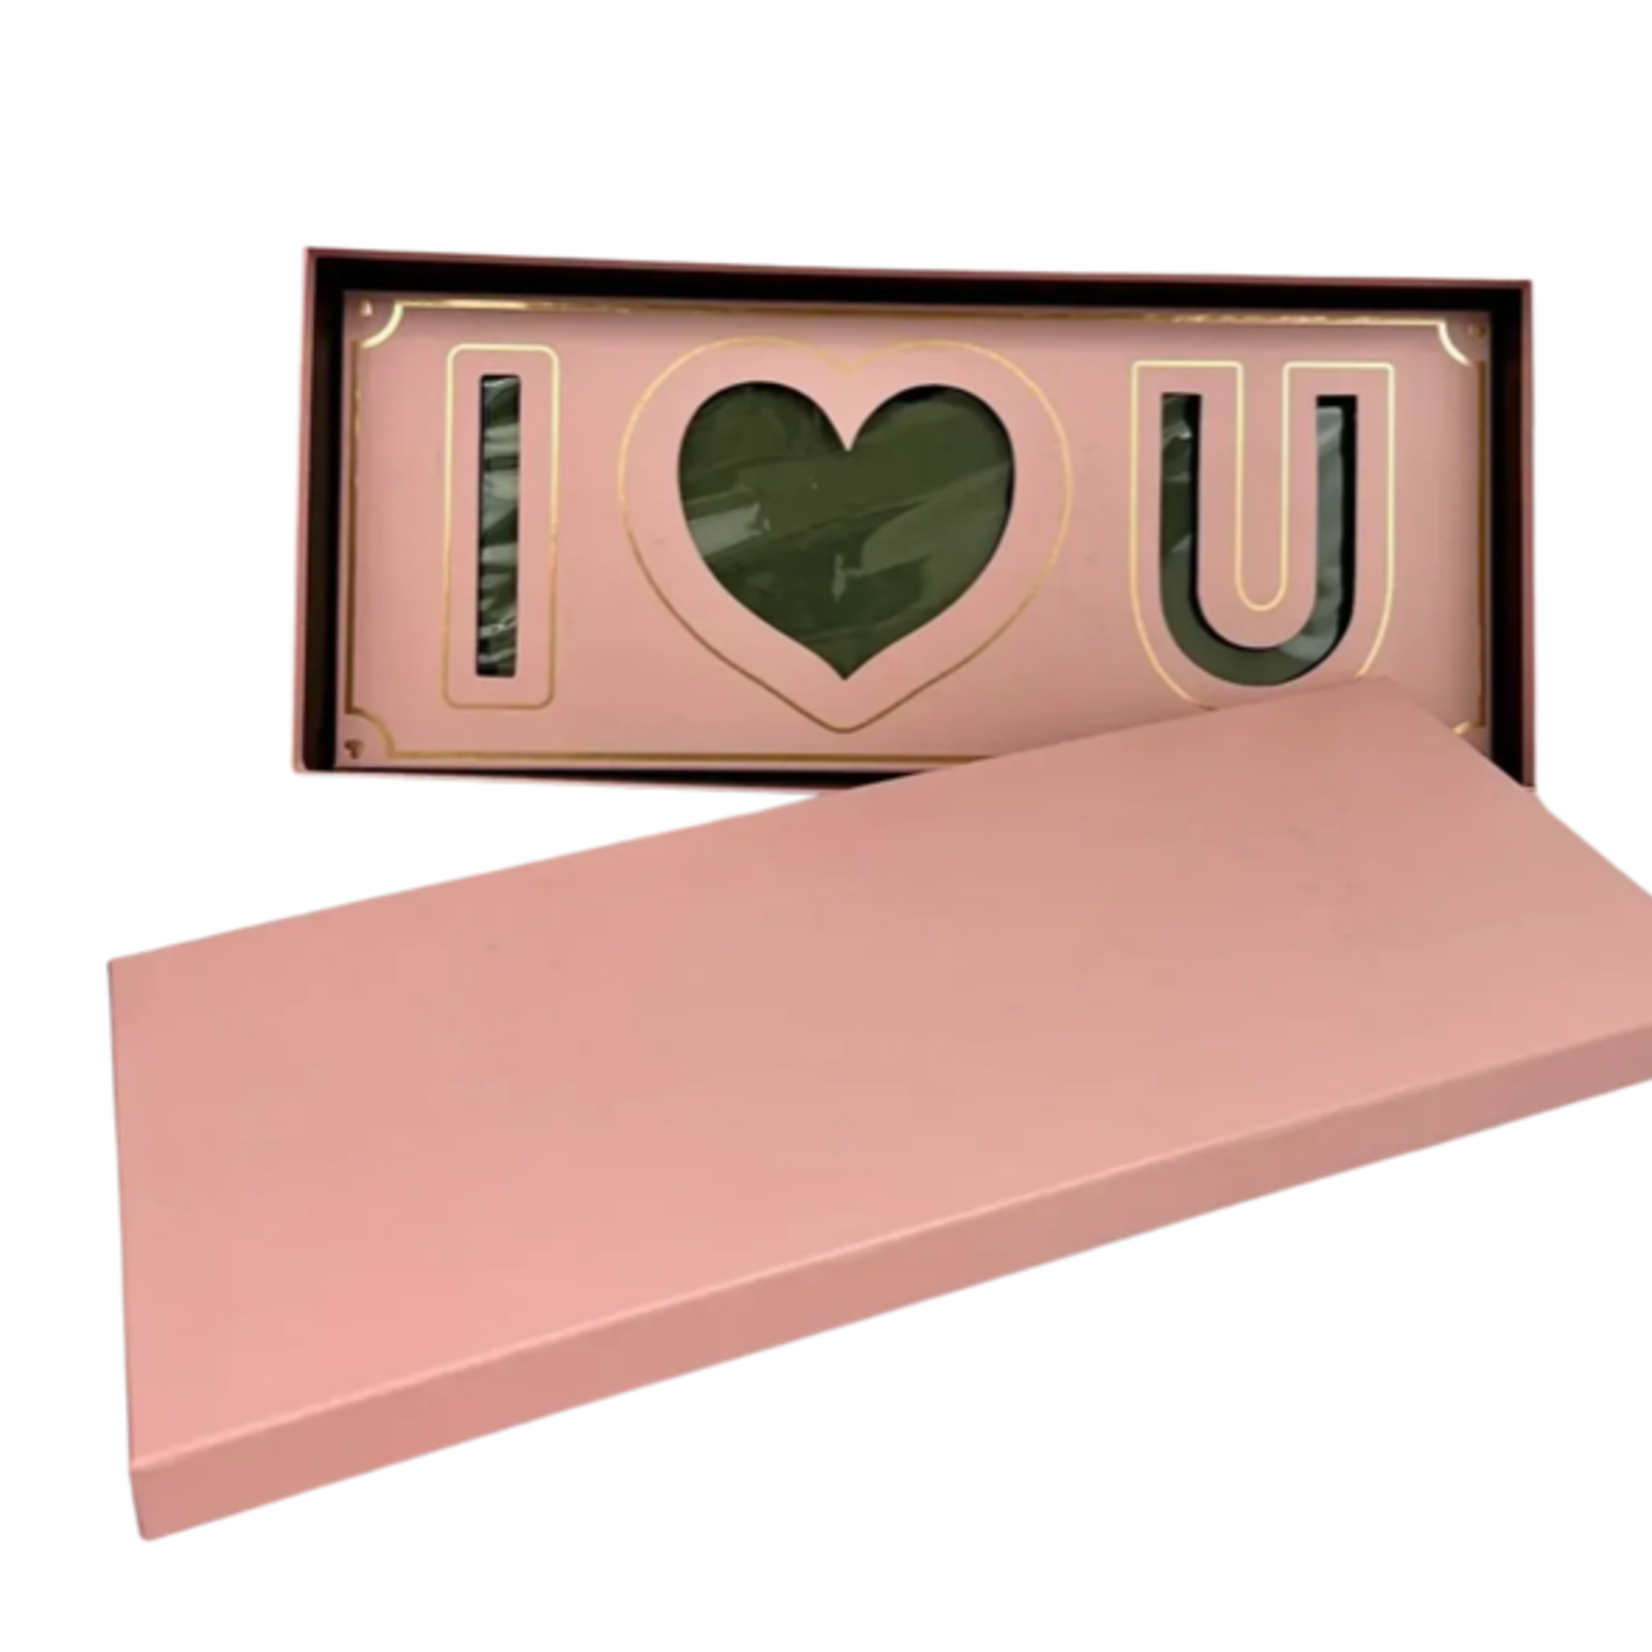 PINK "I LOVE YOU" RECTANGLE BOX, REG $24.99, 40% OFF